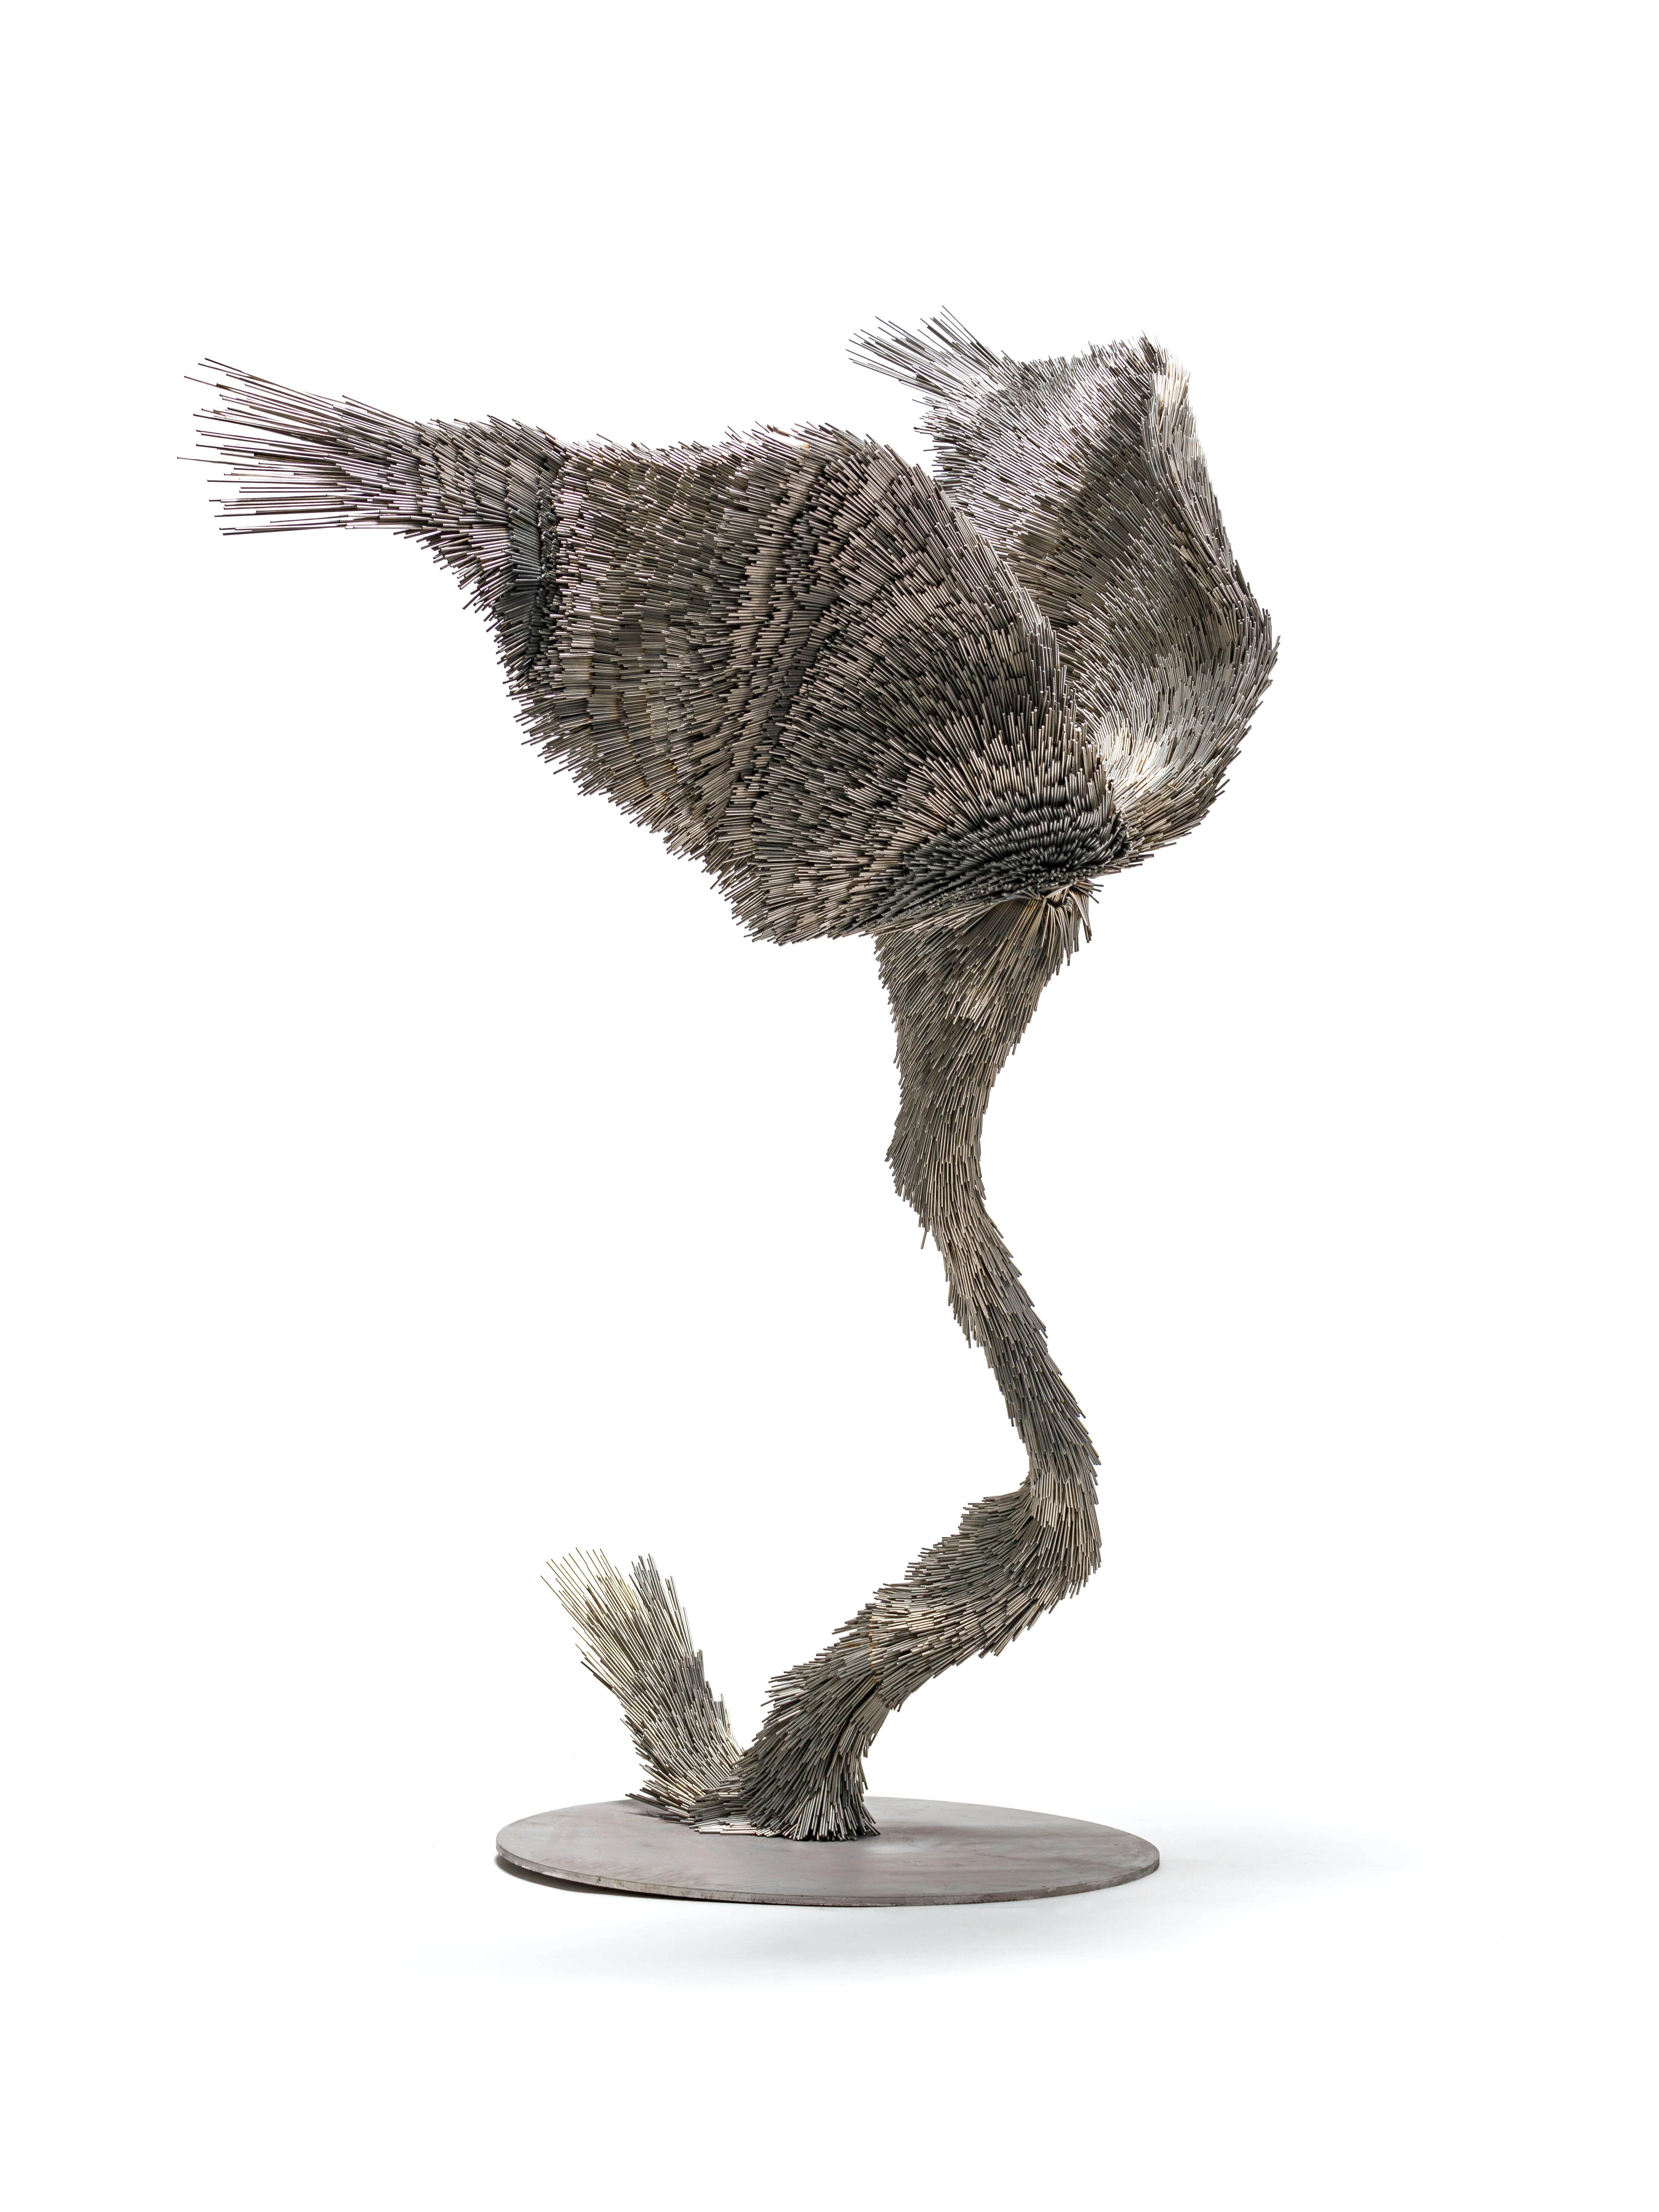 Rilke, Murmuration - Sculpture by Jake Michael Singer